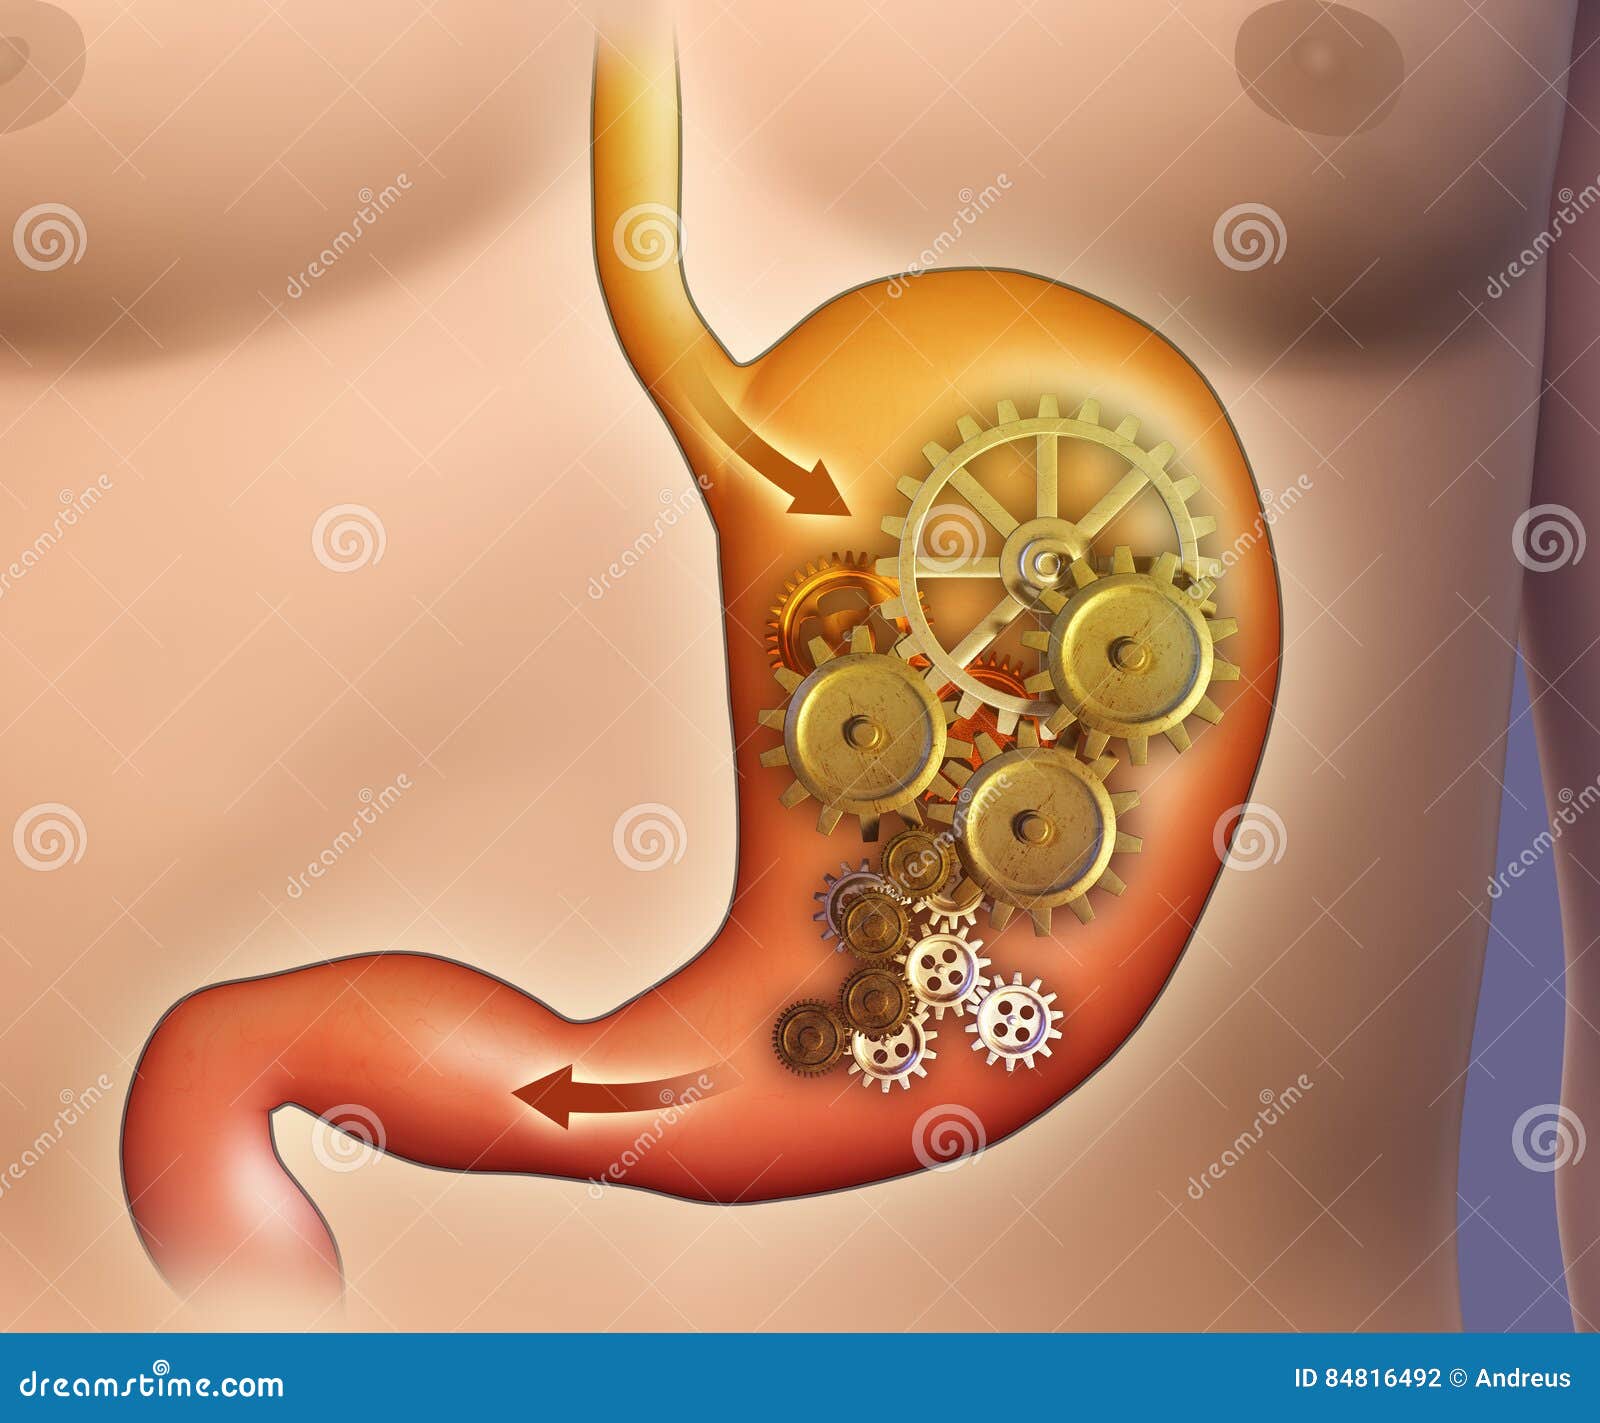 stomach digestion